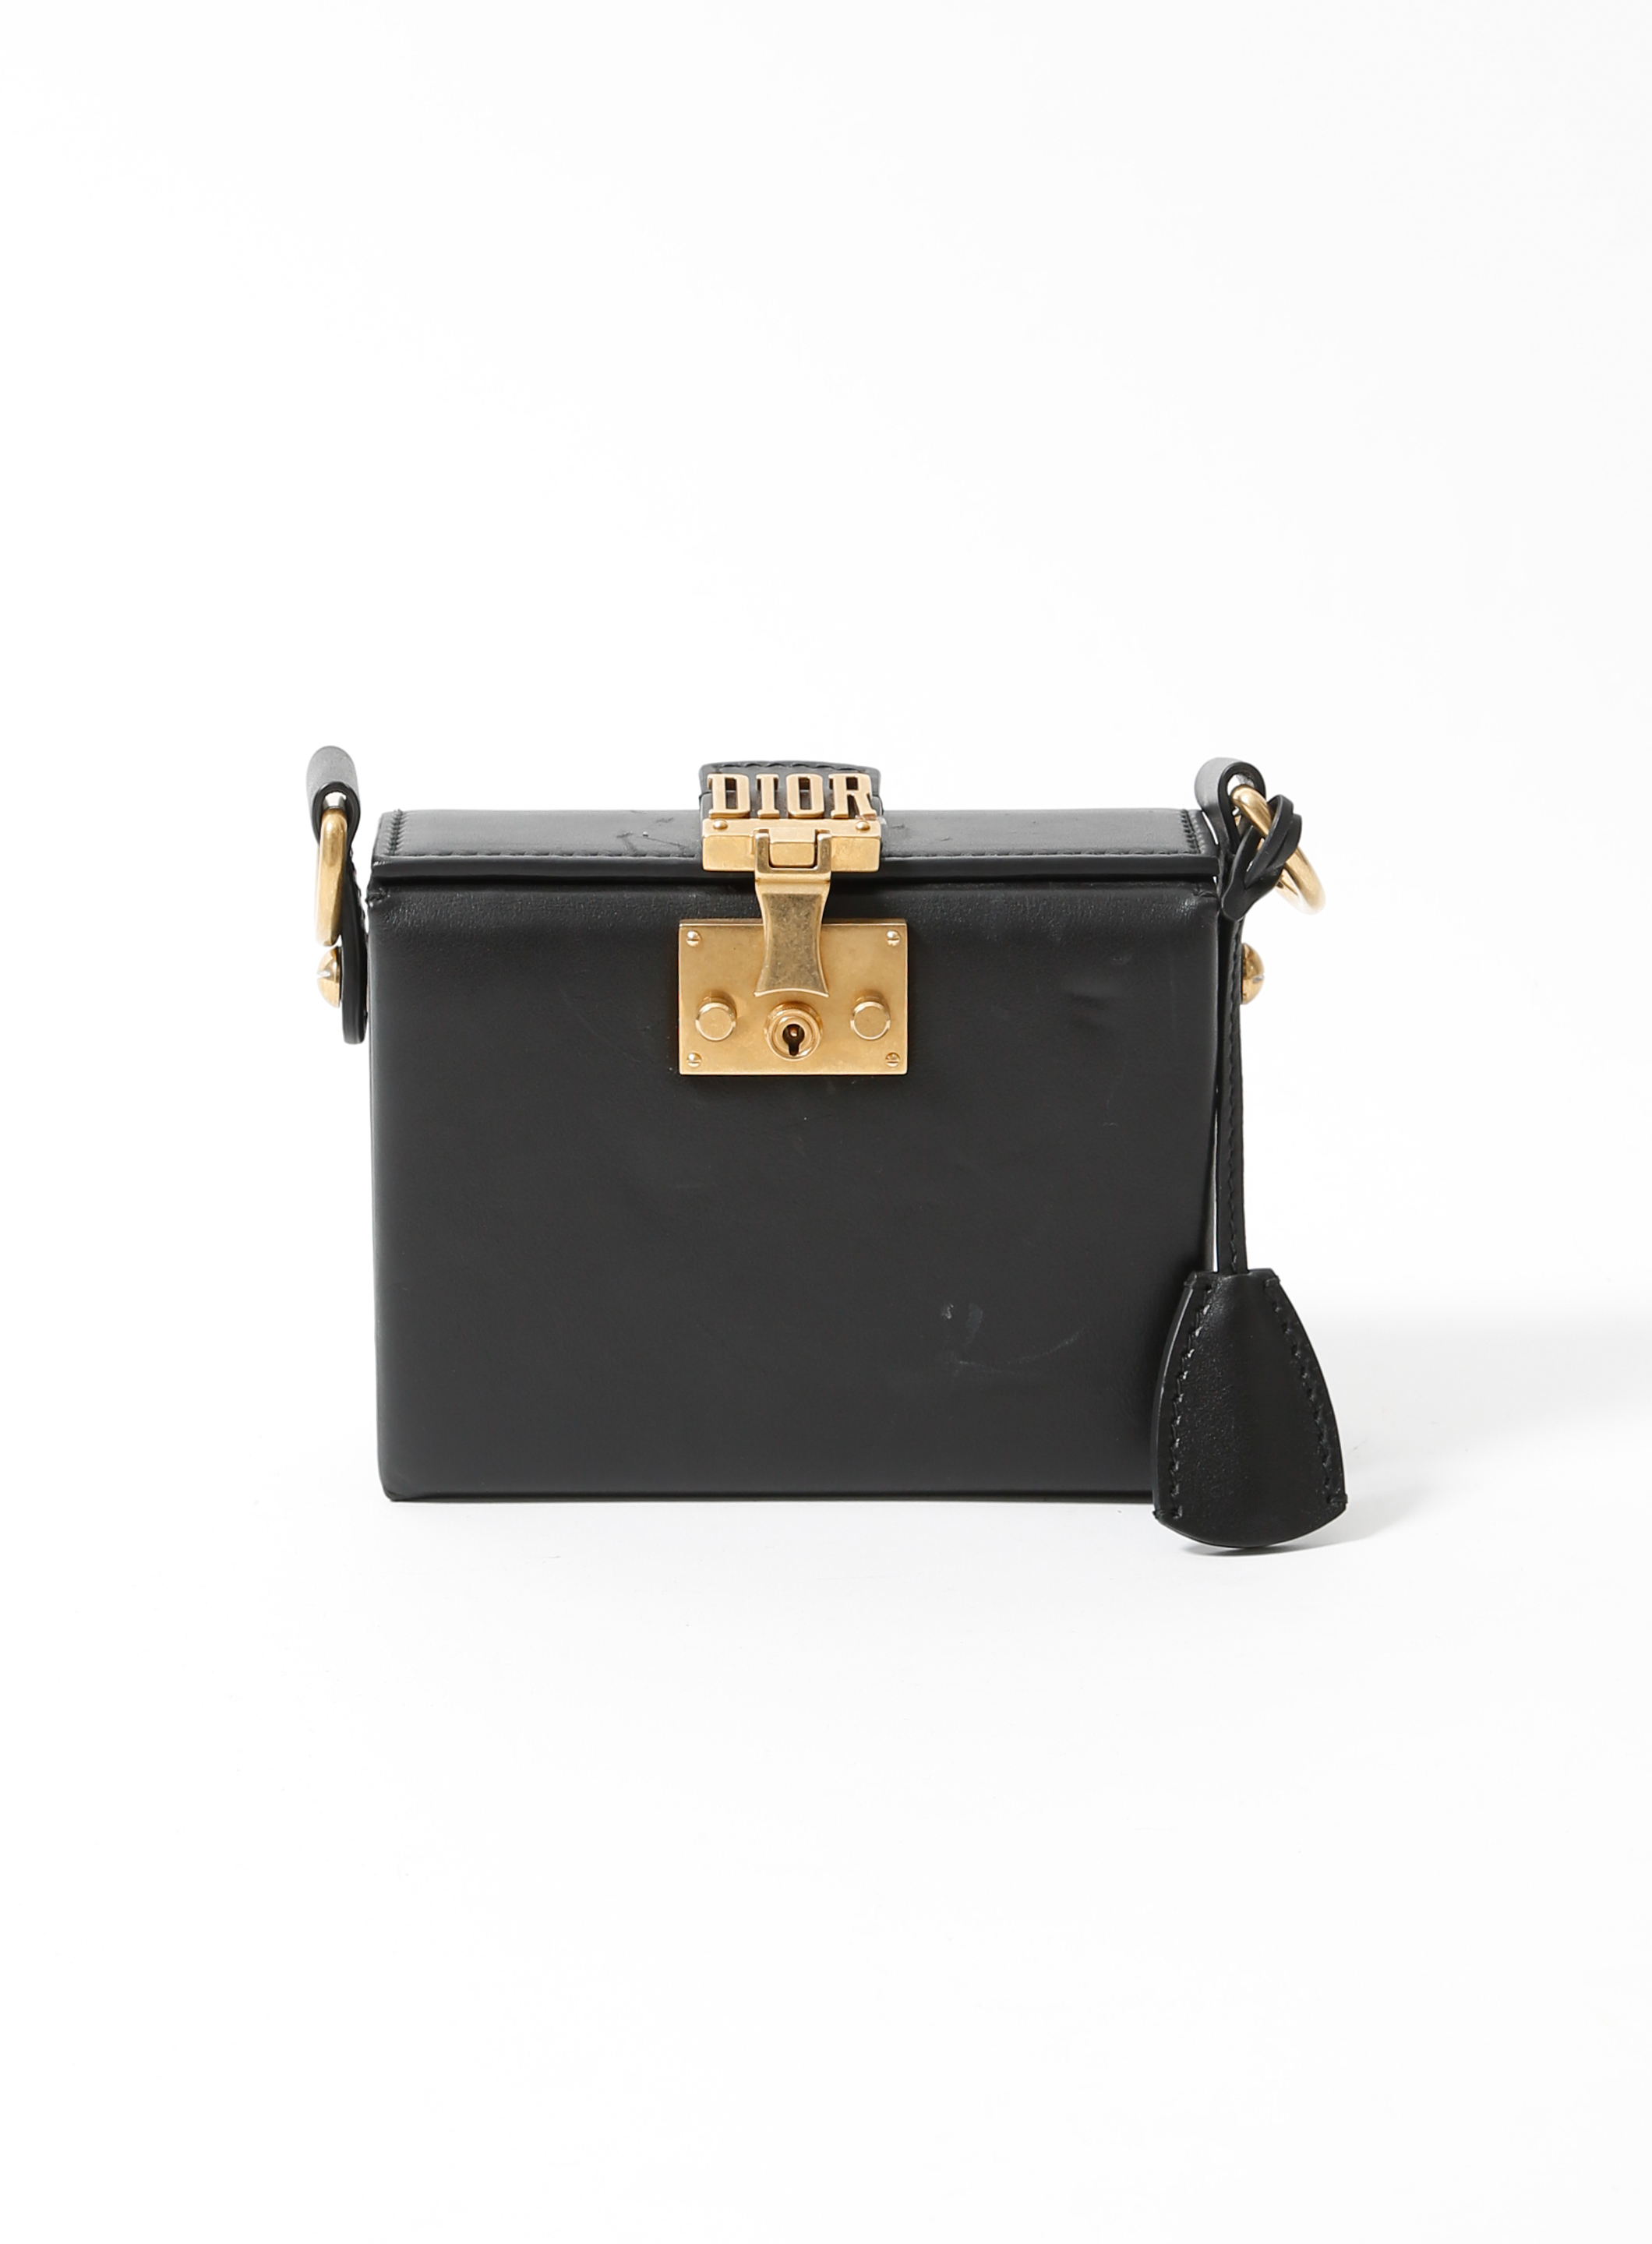 Dior Addict' Lockbox Shoulder Bag, Authentic & Vintage